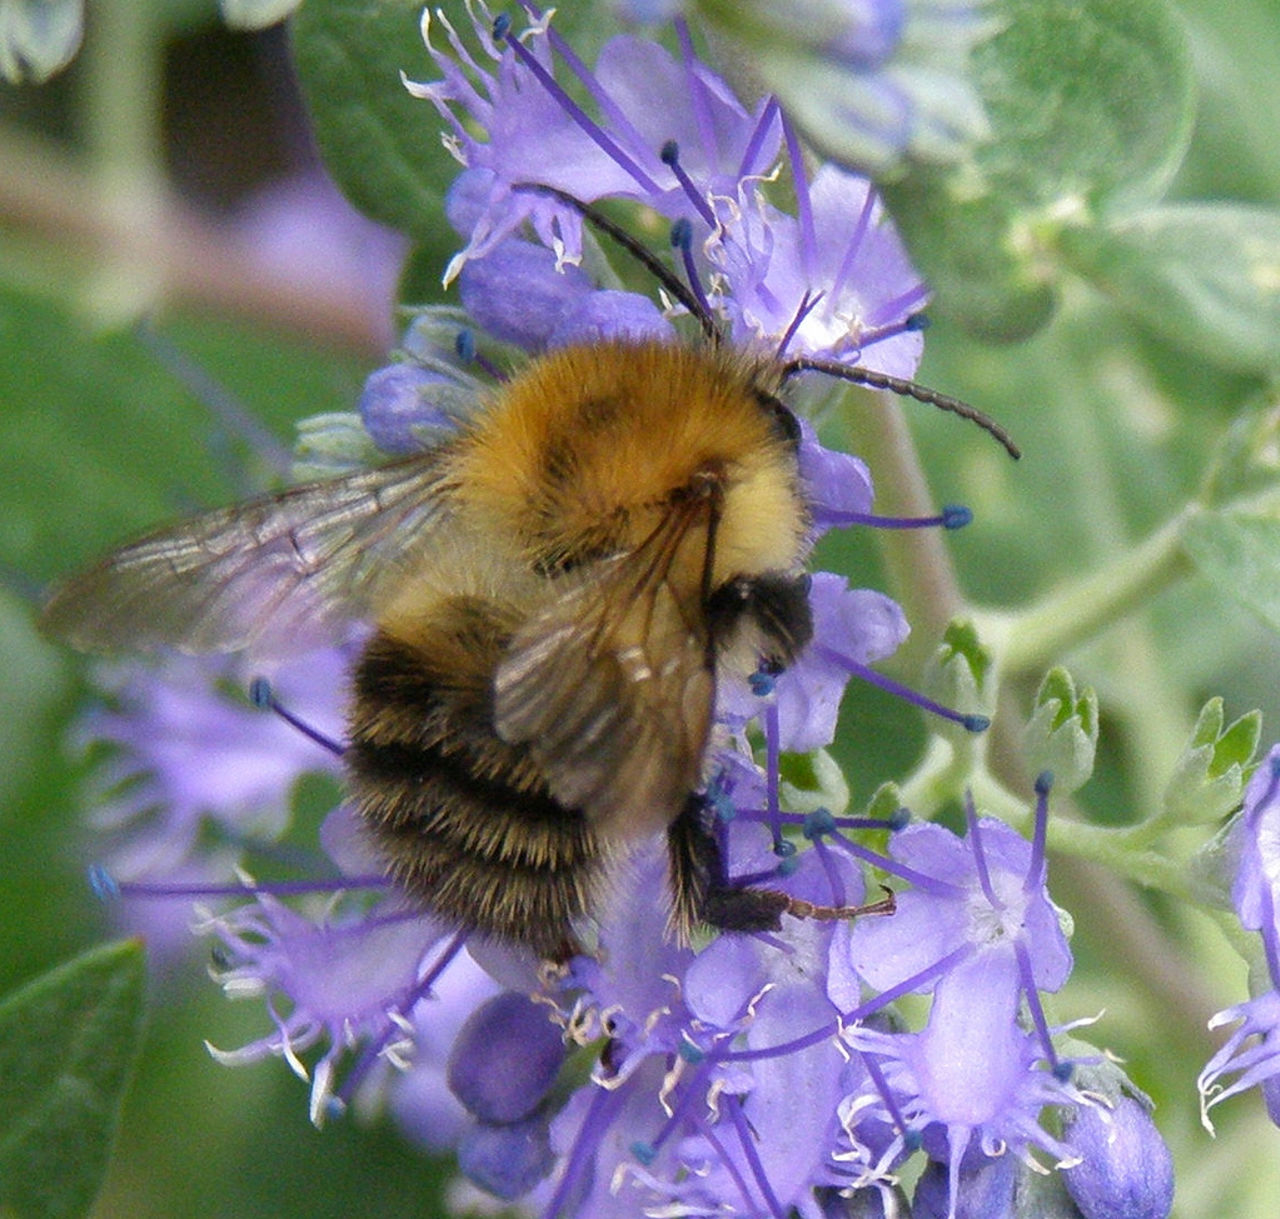 An Irish bee on a lavender flower